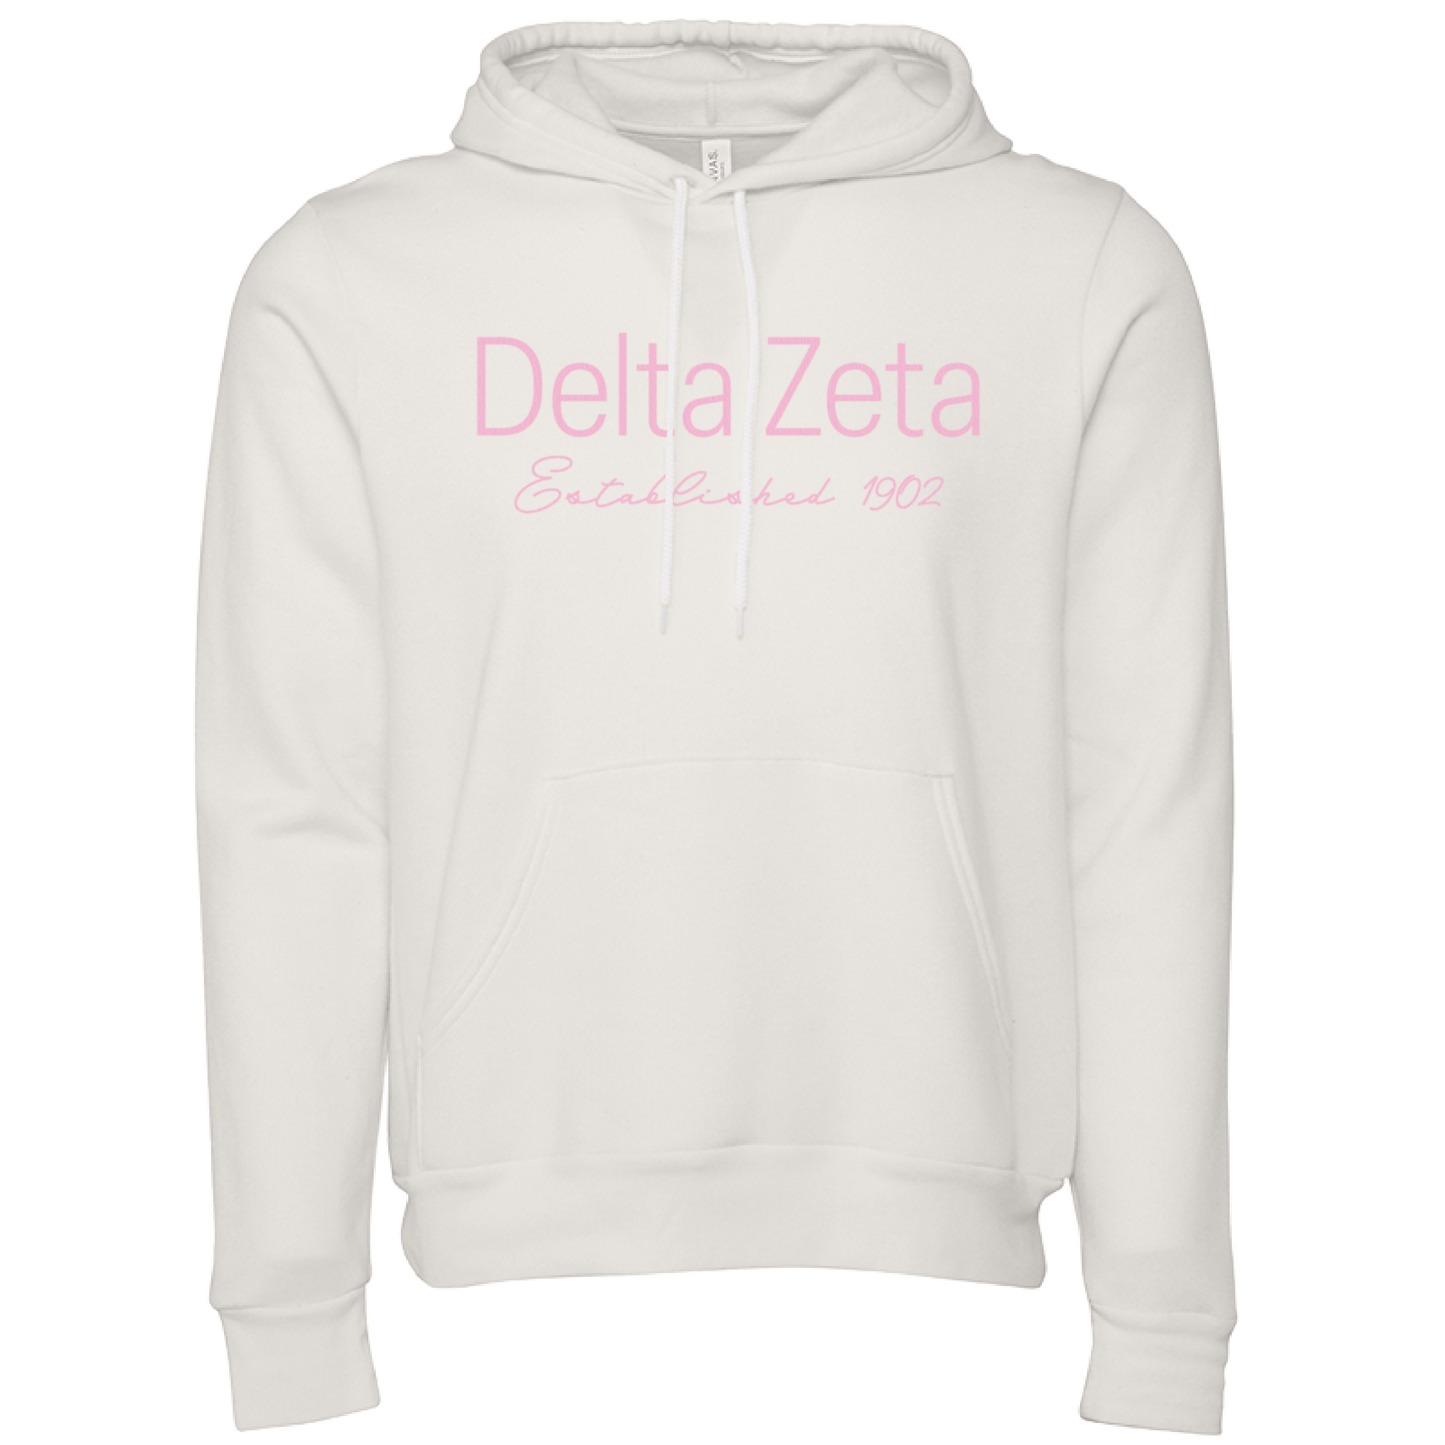 Delta Zeta Embroidered Printed Name Hooded Sweatshirts